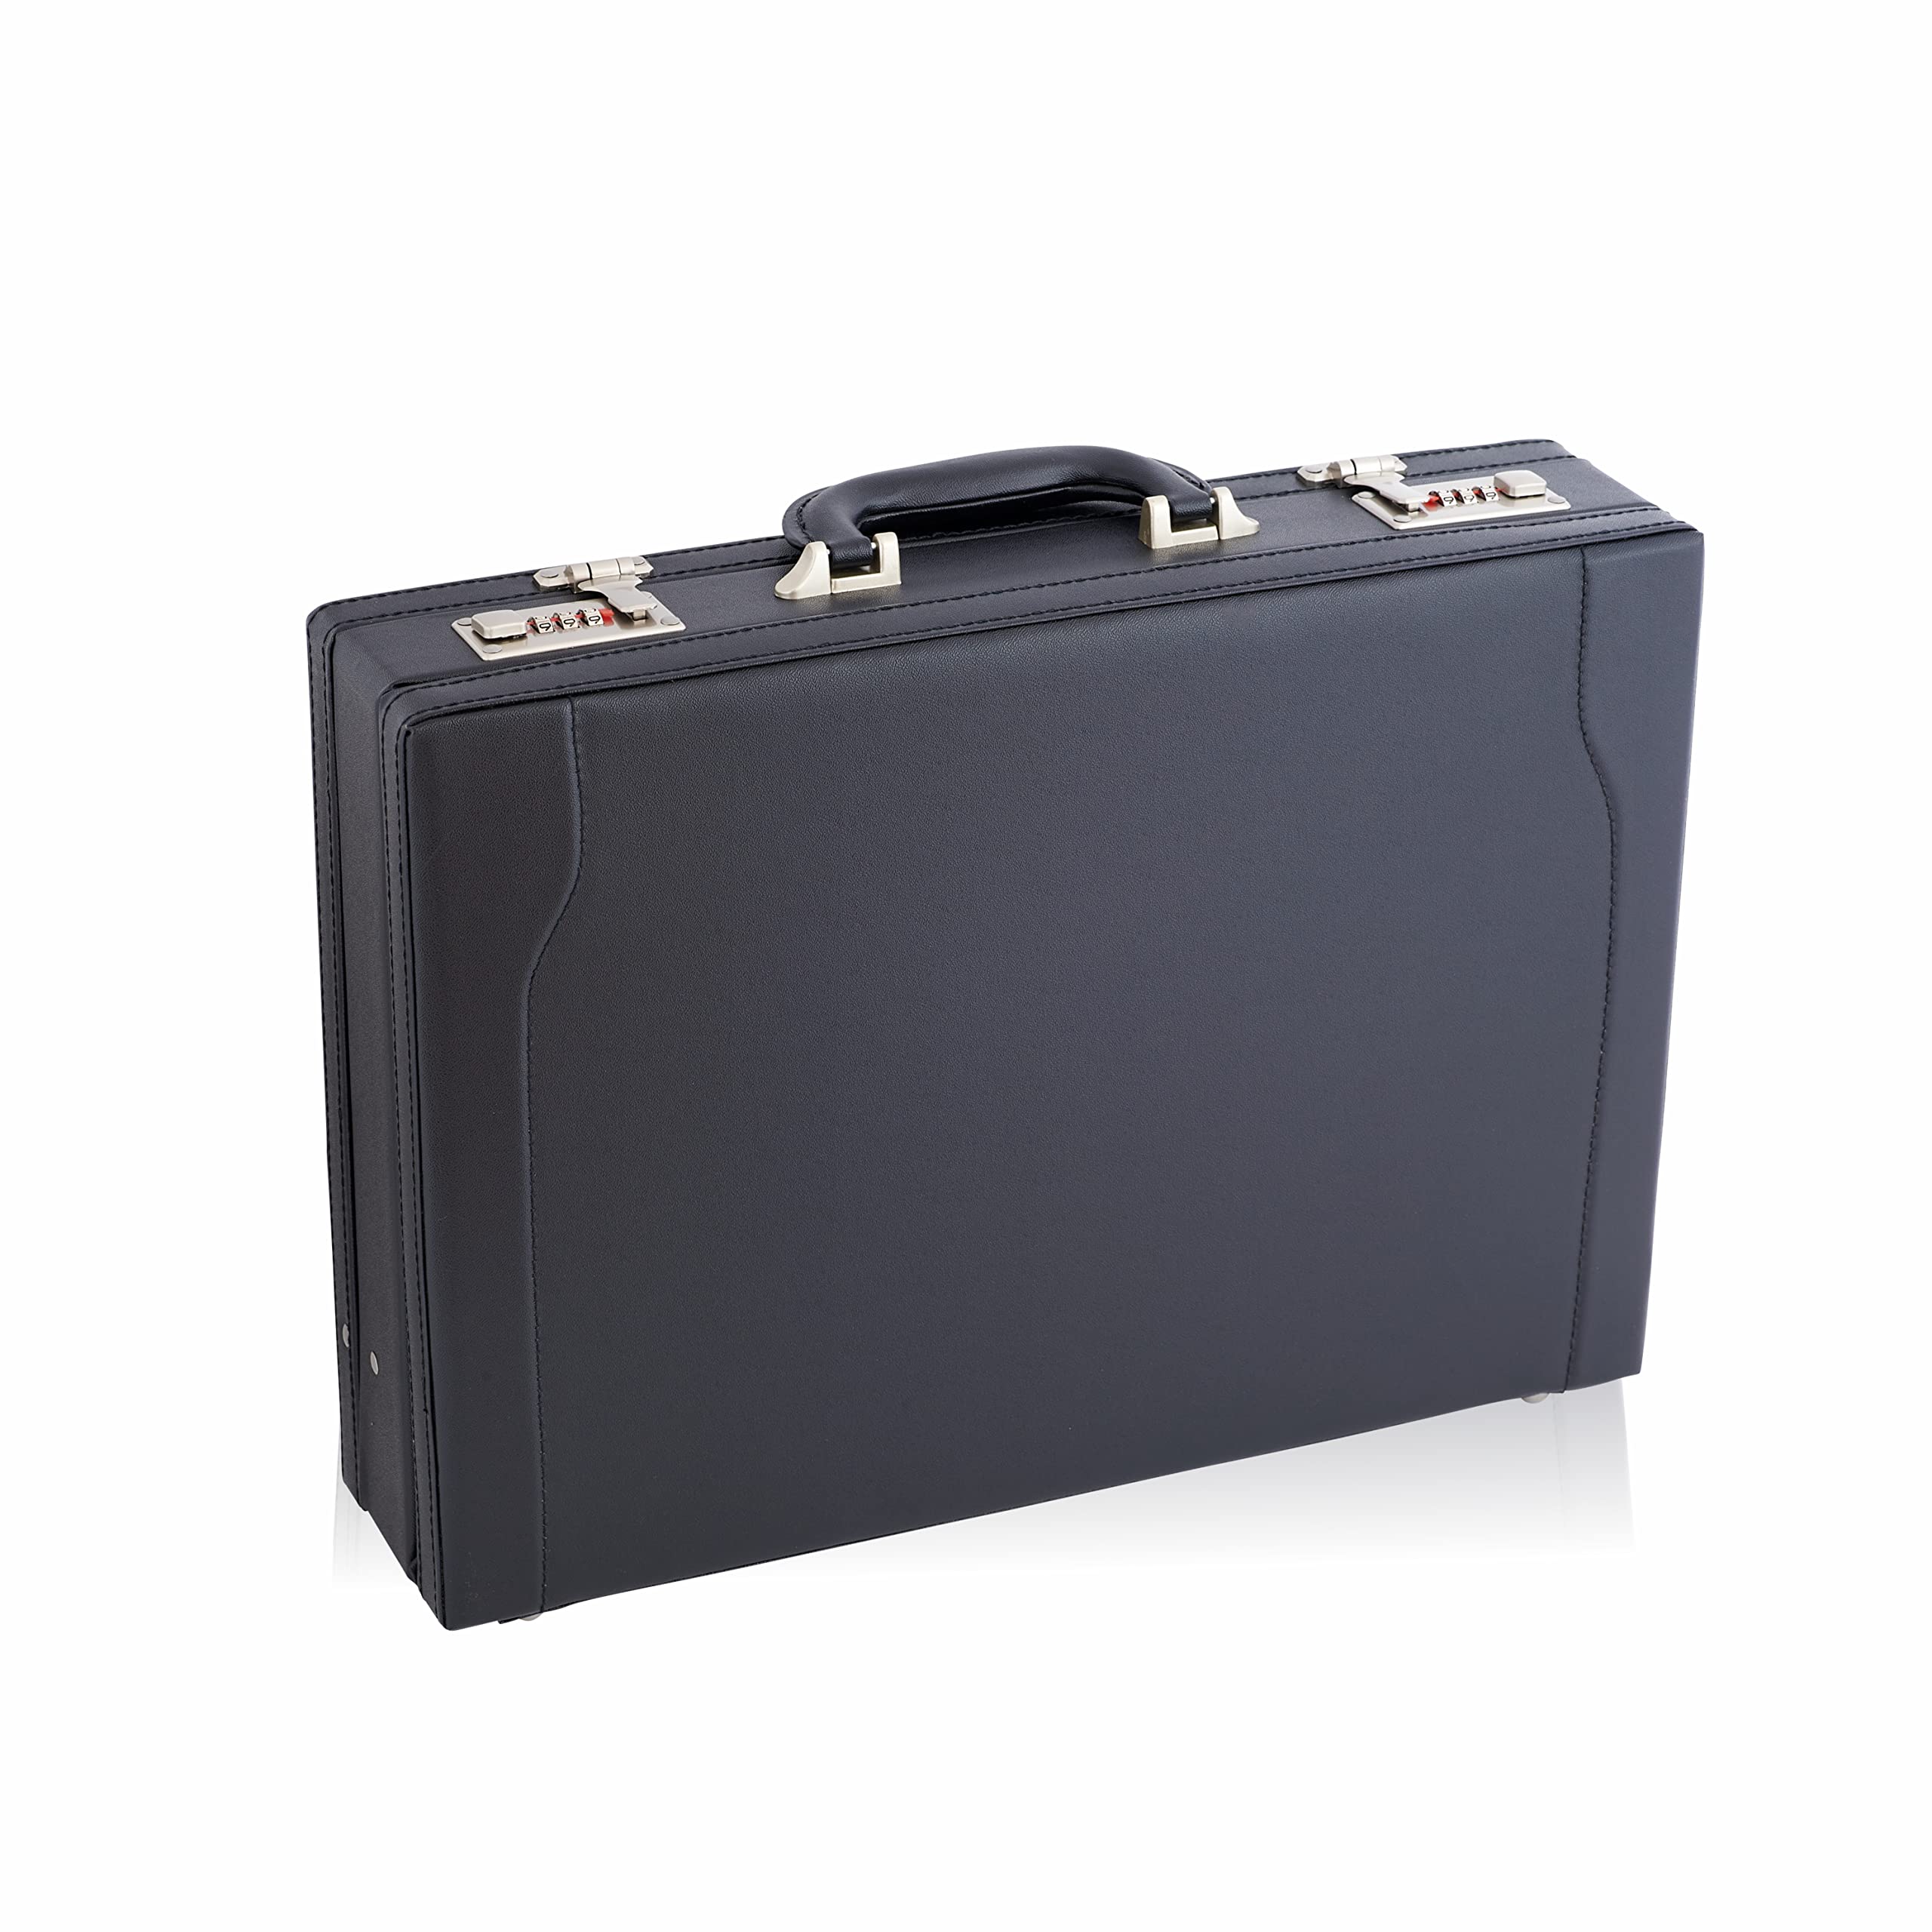 Tassia Attache Briefcase Leather Look Pu Business Bag Expanding Executive Case